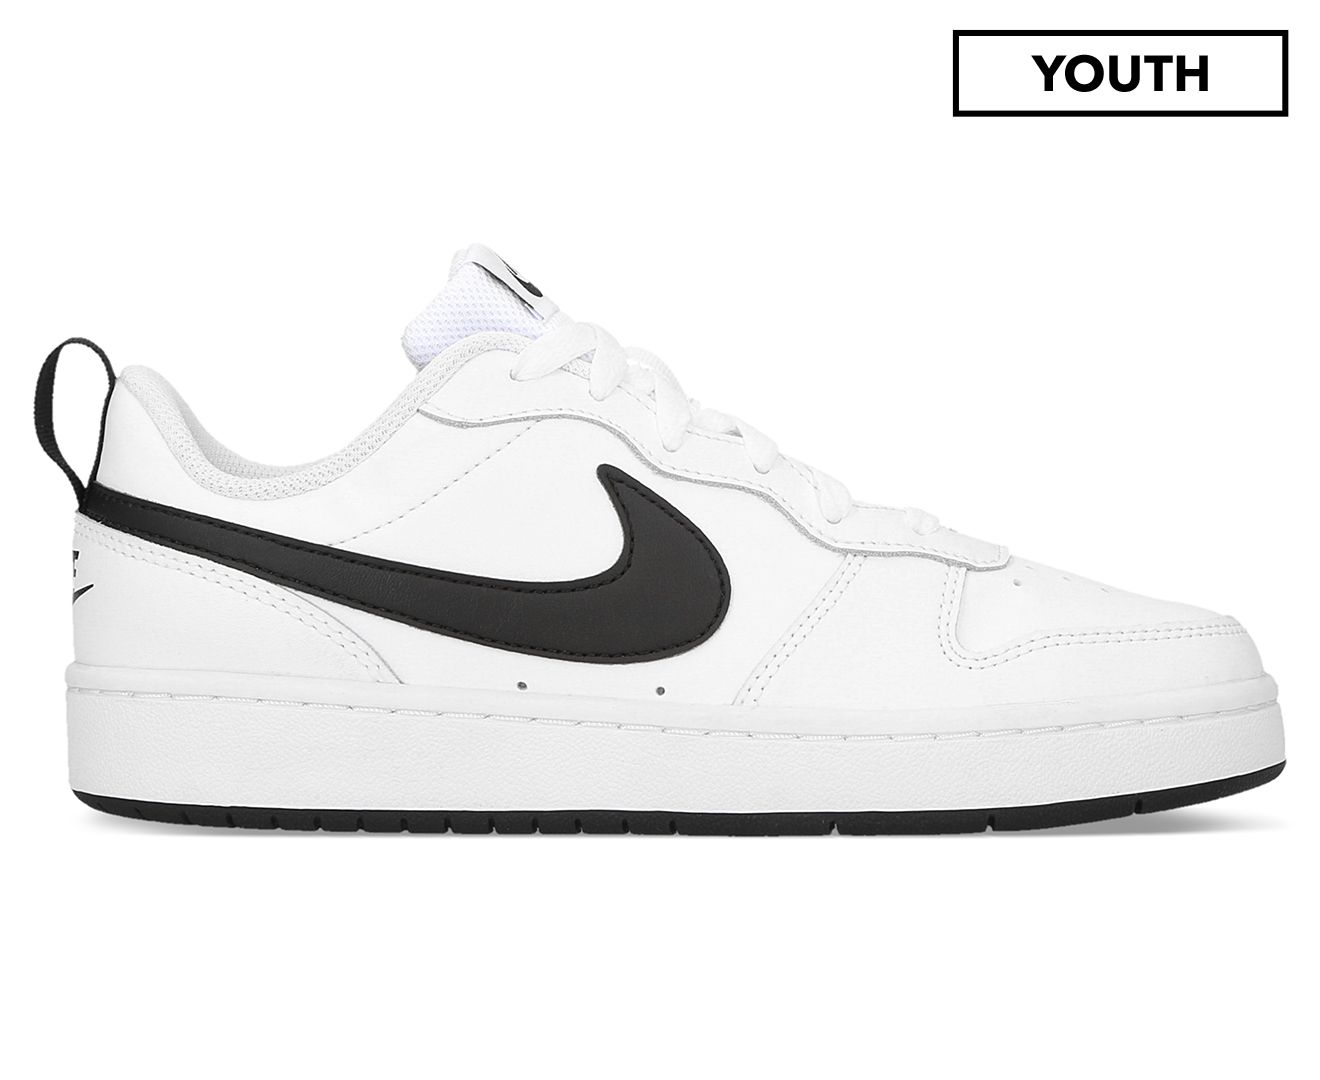 Nike Youth Boys' Court Borough Low 2 Sneakers - White/Black | Catch.com.au